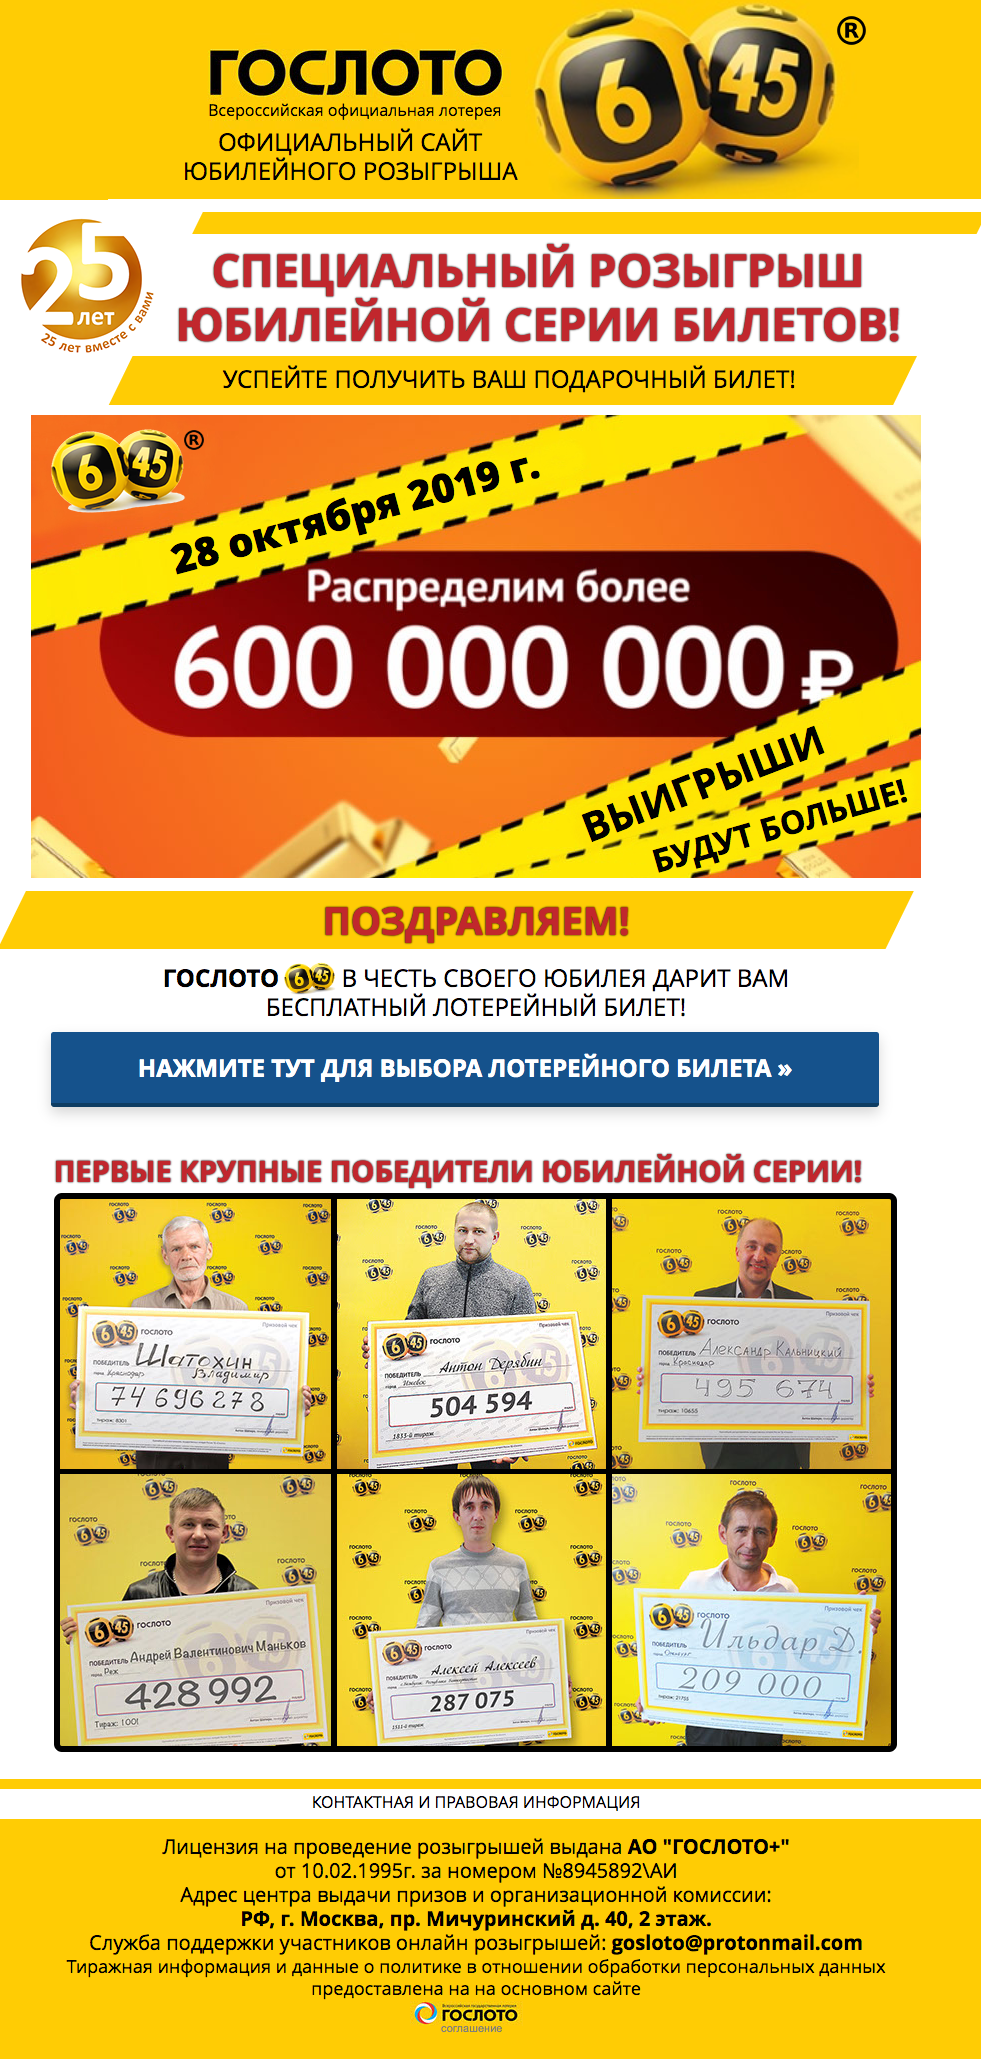 GOSLOTO scam, be careful! - My, Gosloto, Fraud, Scam, Longpost, Divorce for money